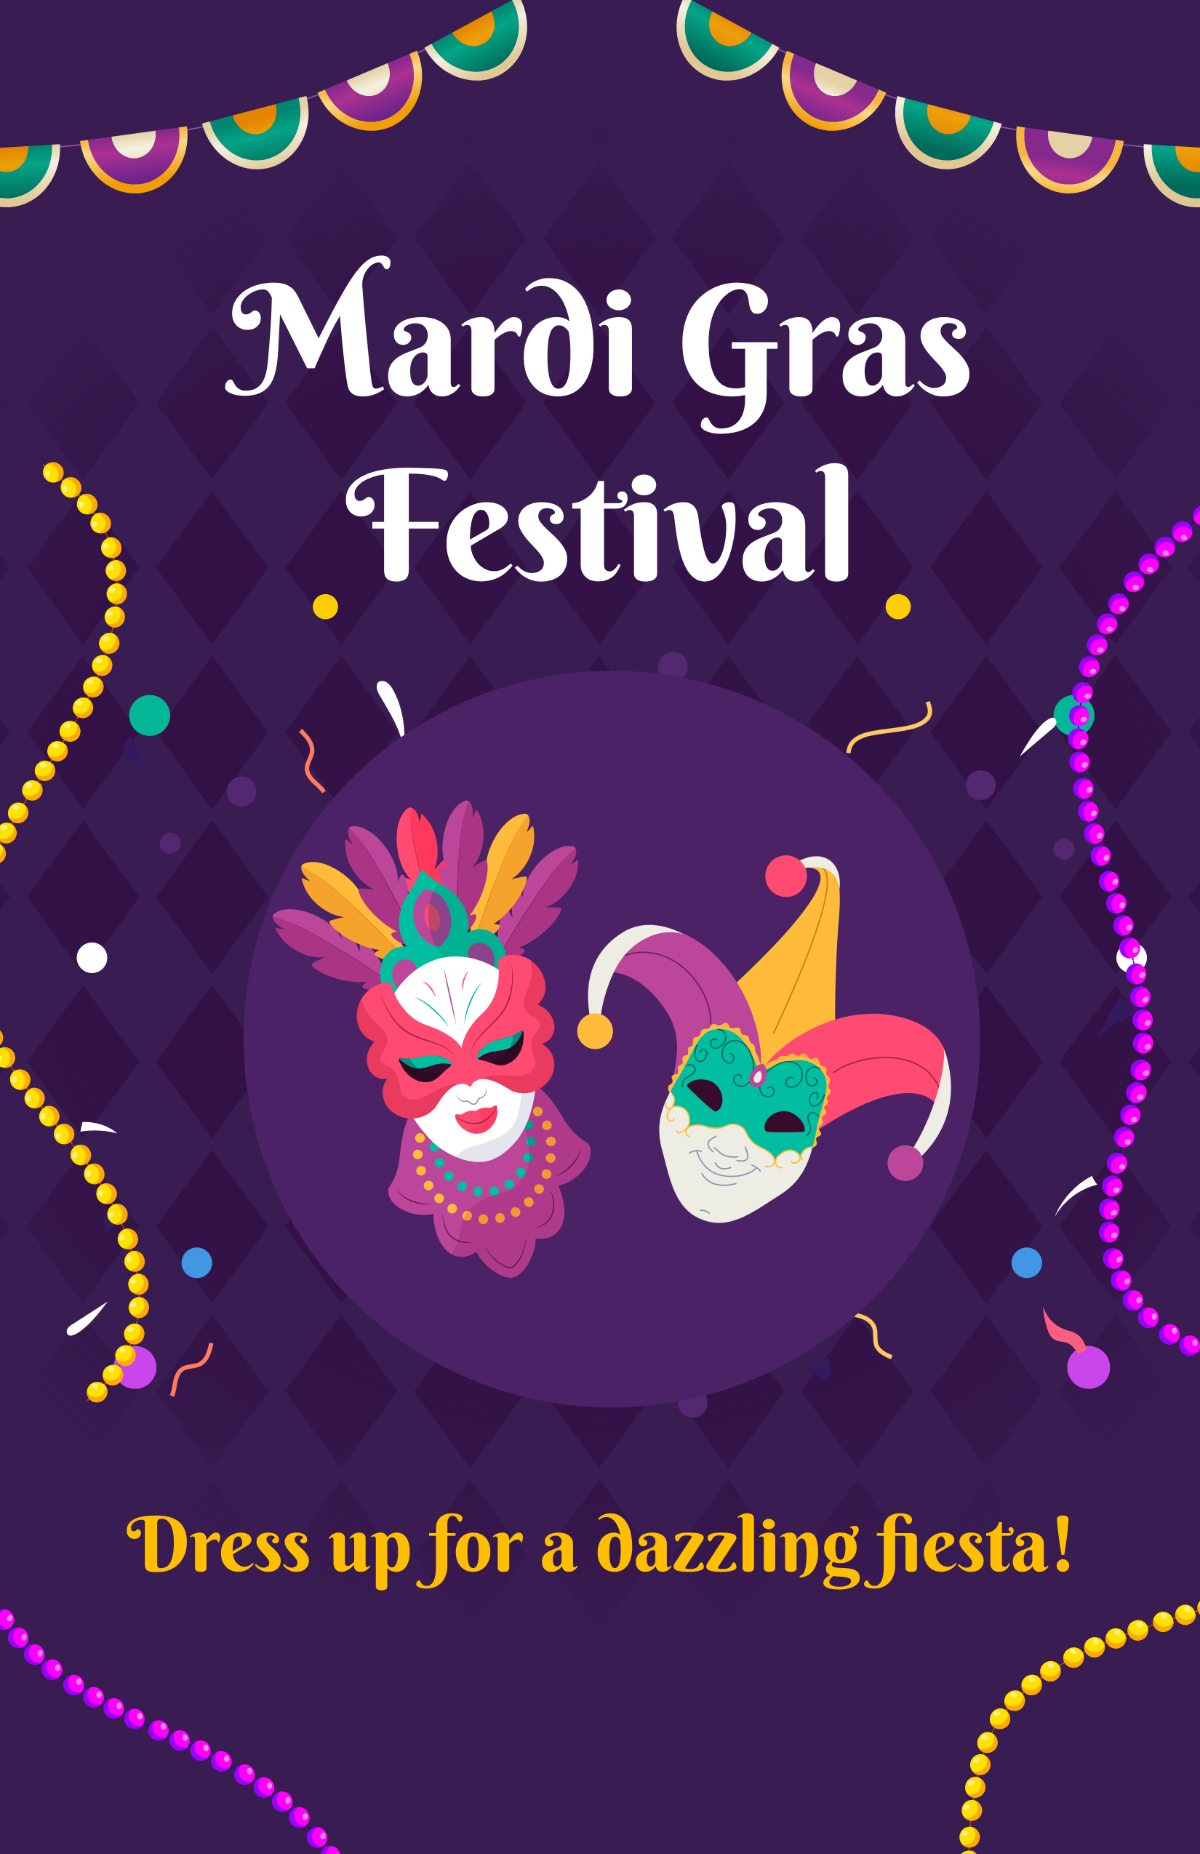 Mardi Gras Festival Posters Template